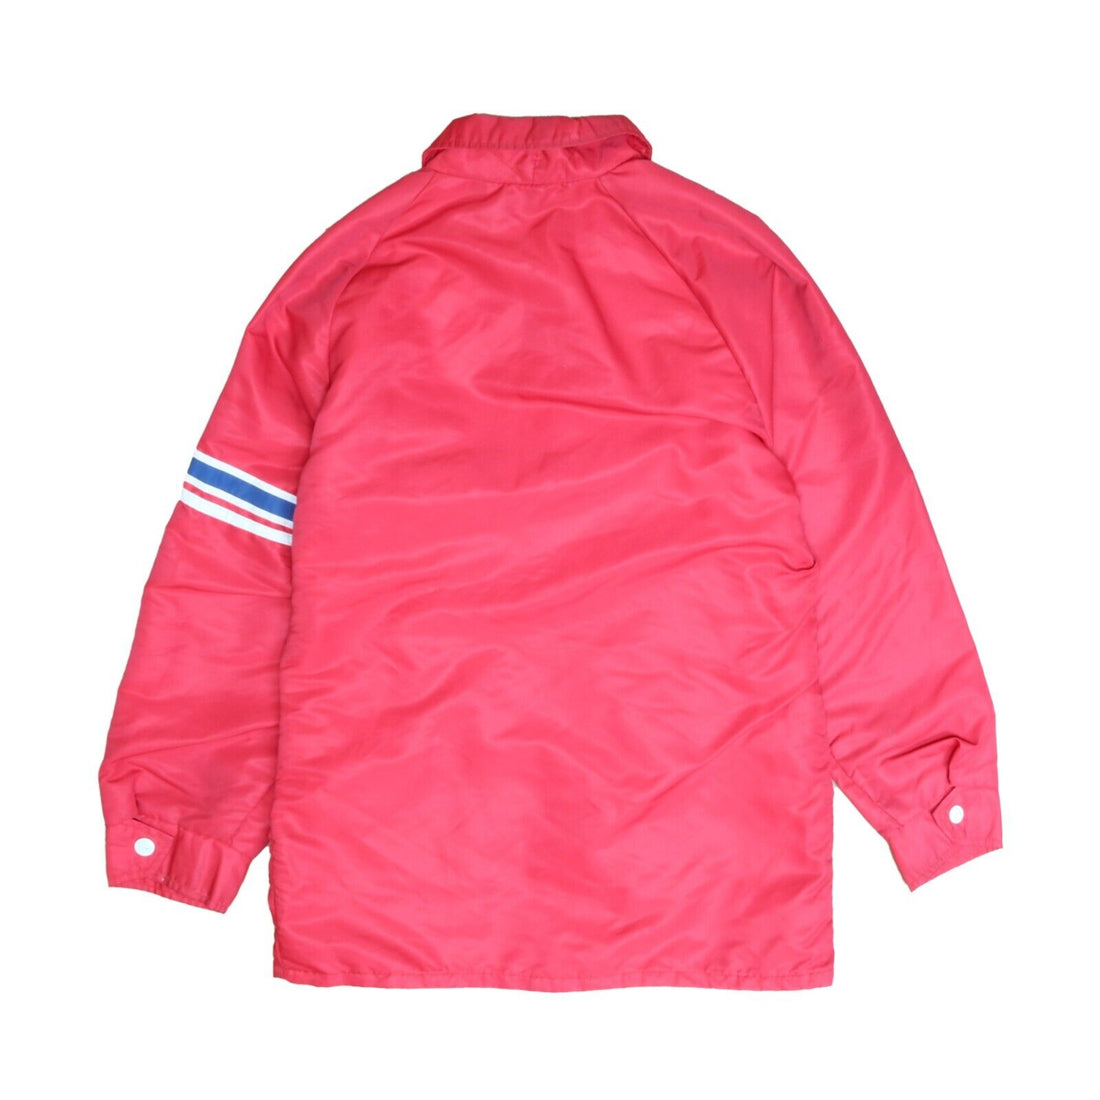 Vintage All Pro Football Coach Jacket Size Medium Red